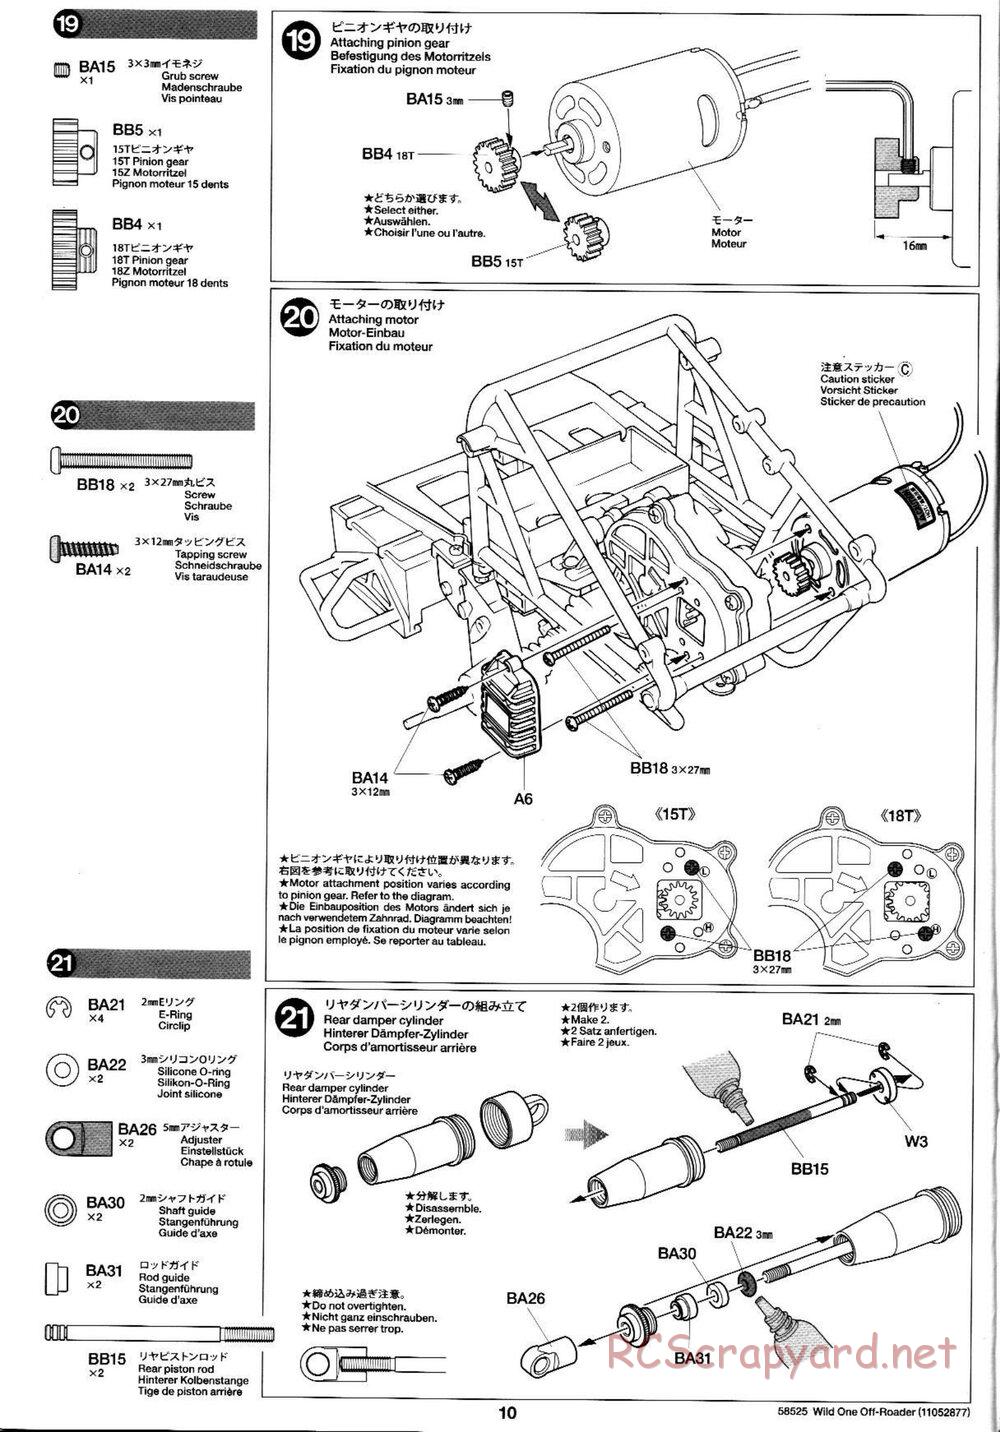 Tamiya - Wild One Off-Roader - FAV Chassis - Manual - Page 10